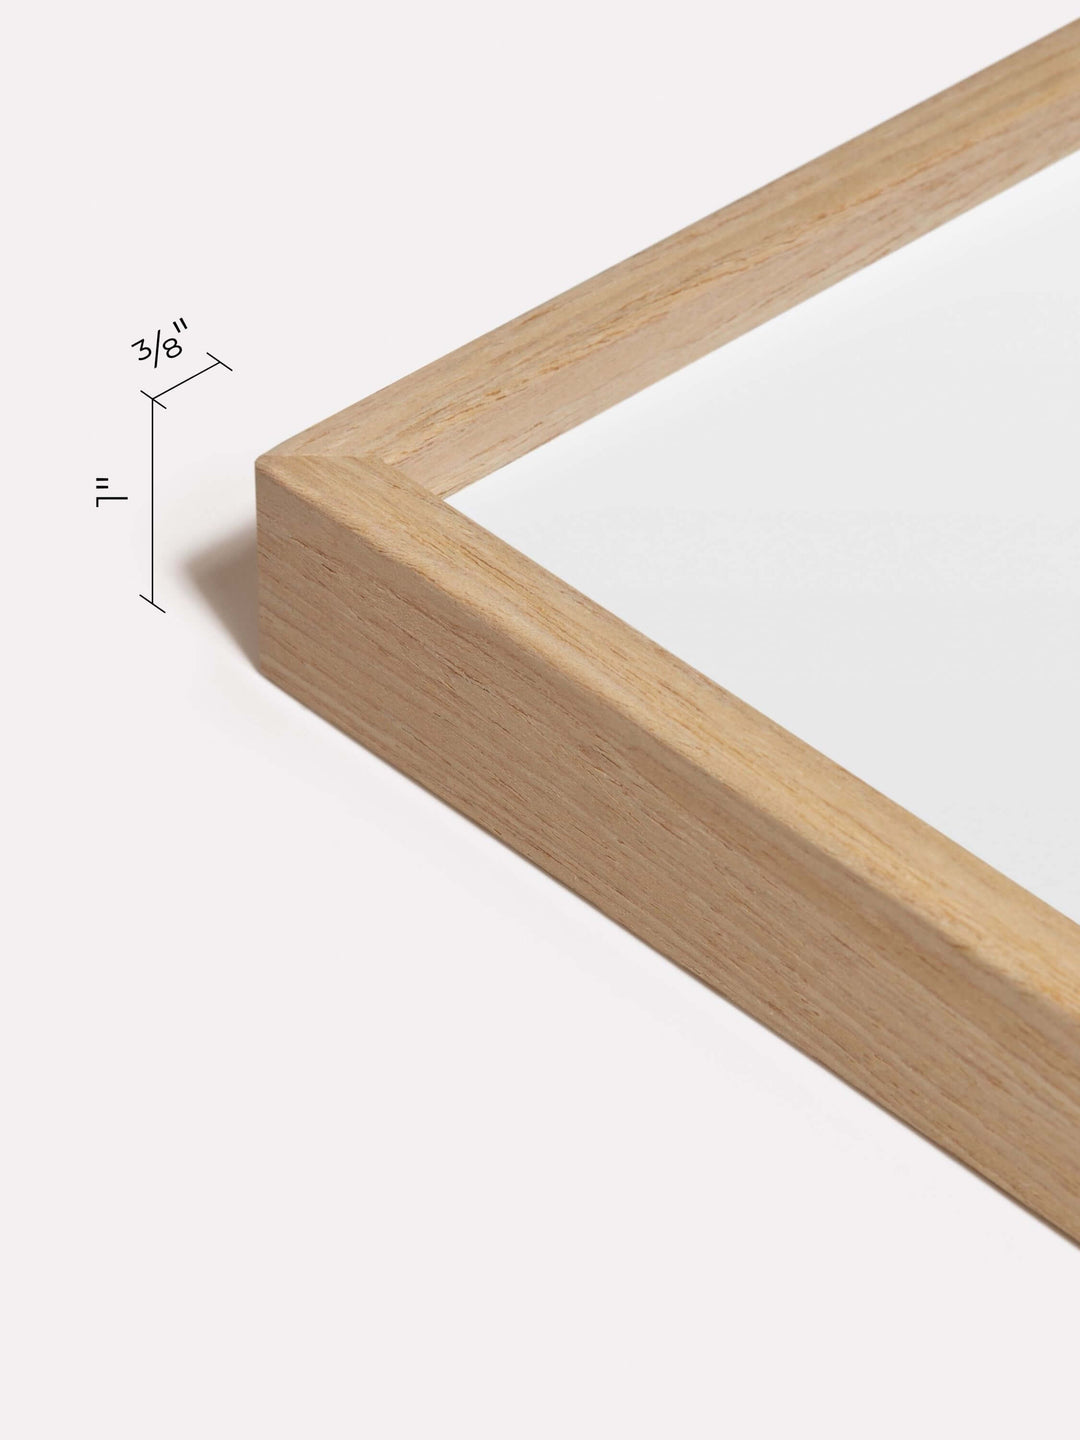 5x7-inch Thin Frame, Oak - Close-up view